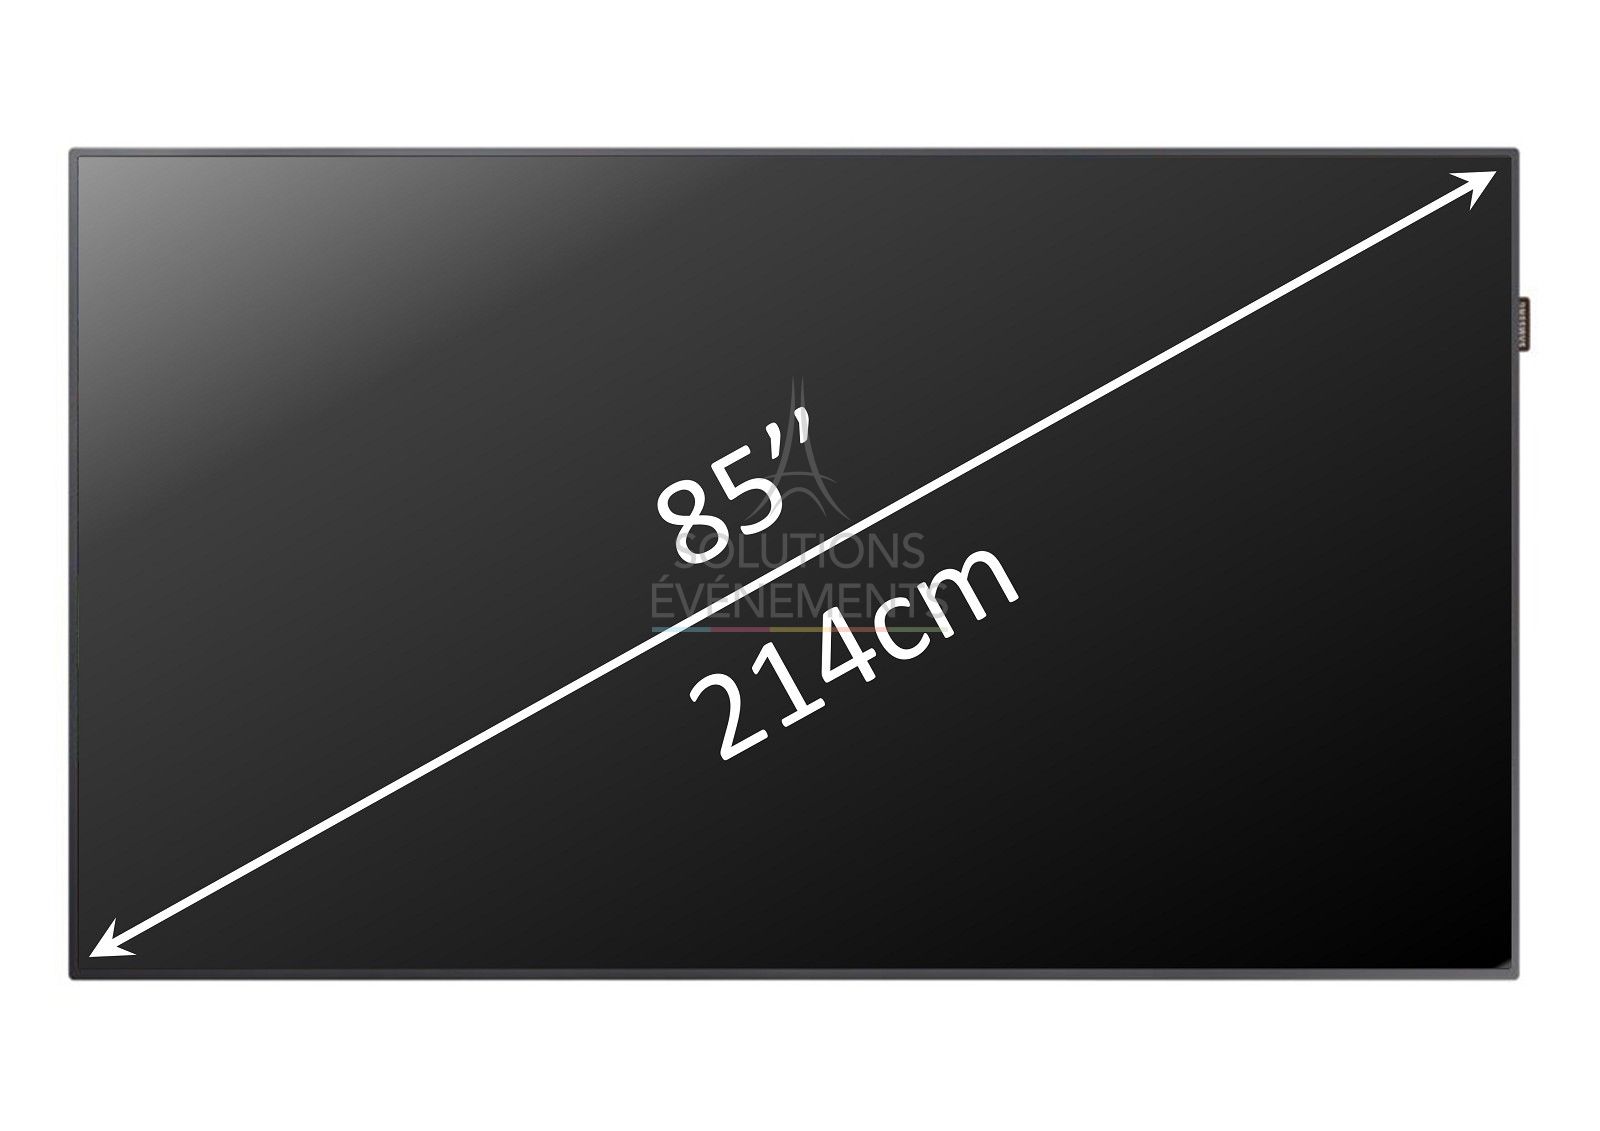 Giant 85-inch flat screen rental